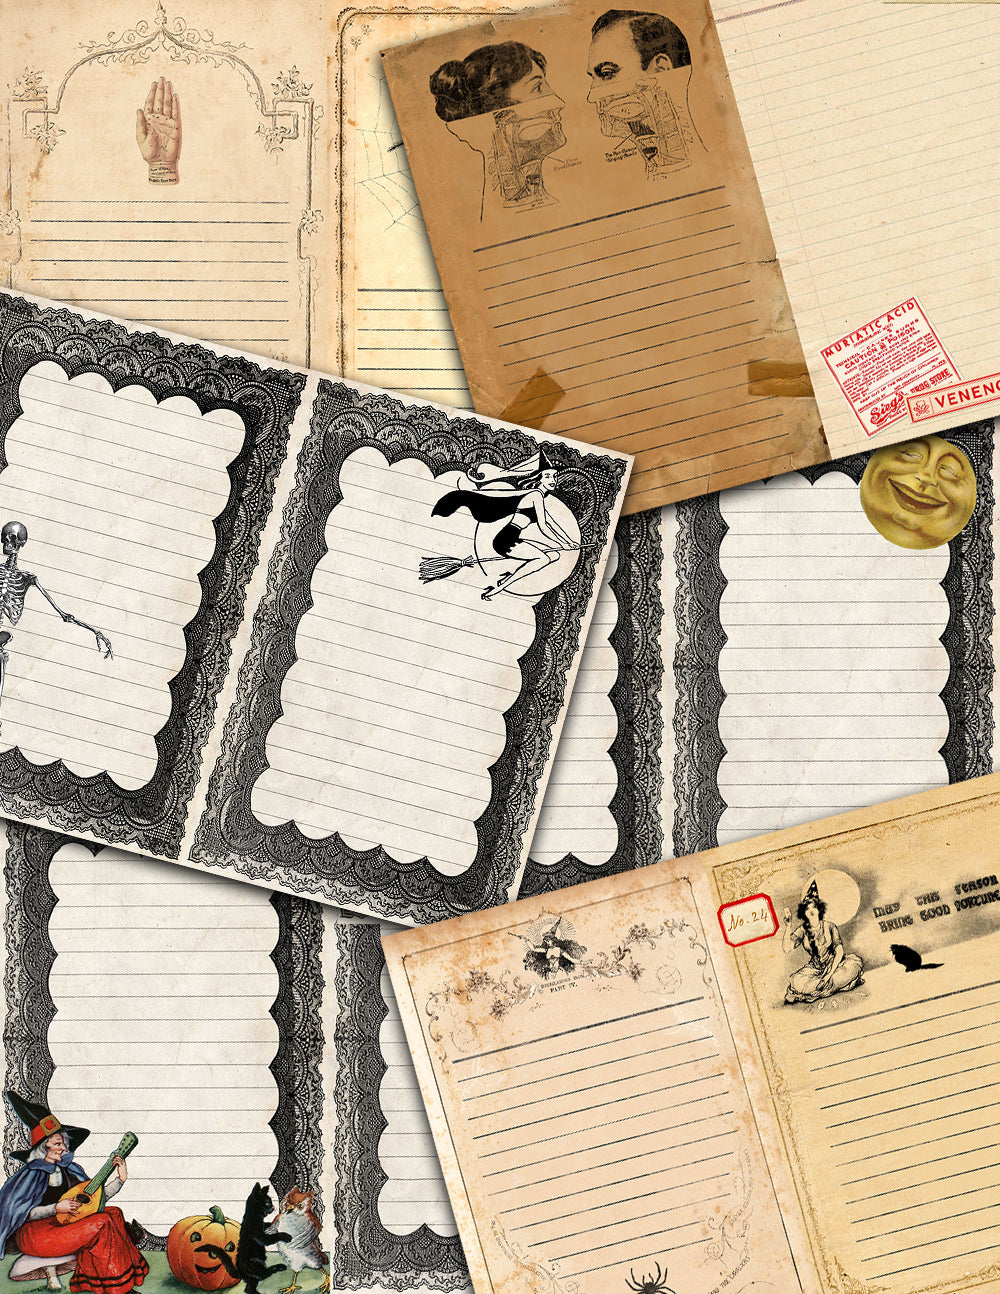 Vintage Retro Halloween, Junk Journal Kit -40pg Digital Download- Ephemera, Journaling Pages, Lined Paper, Tags, Cards, Jars, Witch Journal